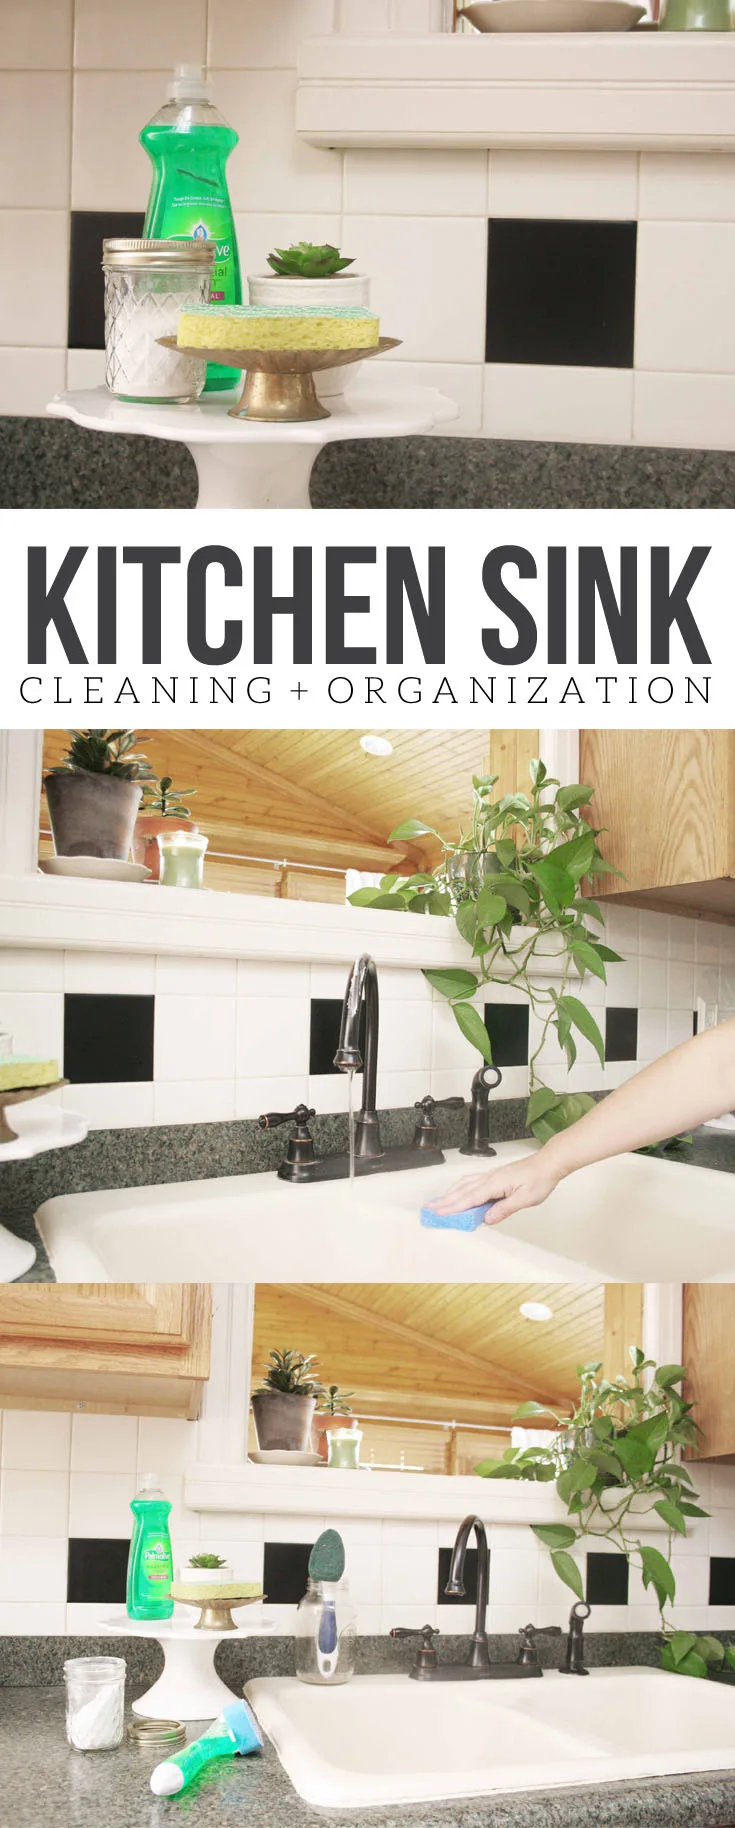 https://craftivitydesigns.com/wp-content/uploads/2017/10/farmhouse-style-faucet-kitchen-sink-organization-pin.jpg.webp